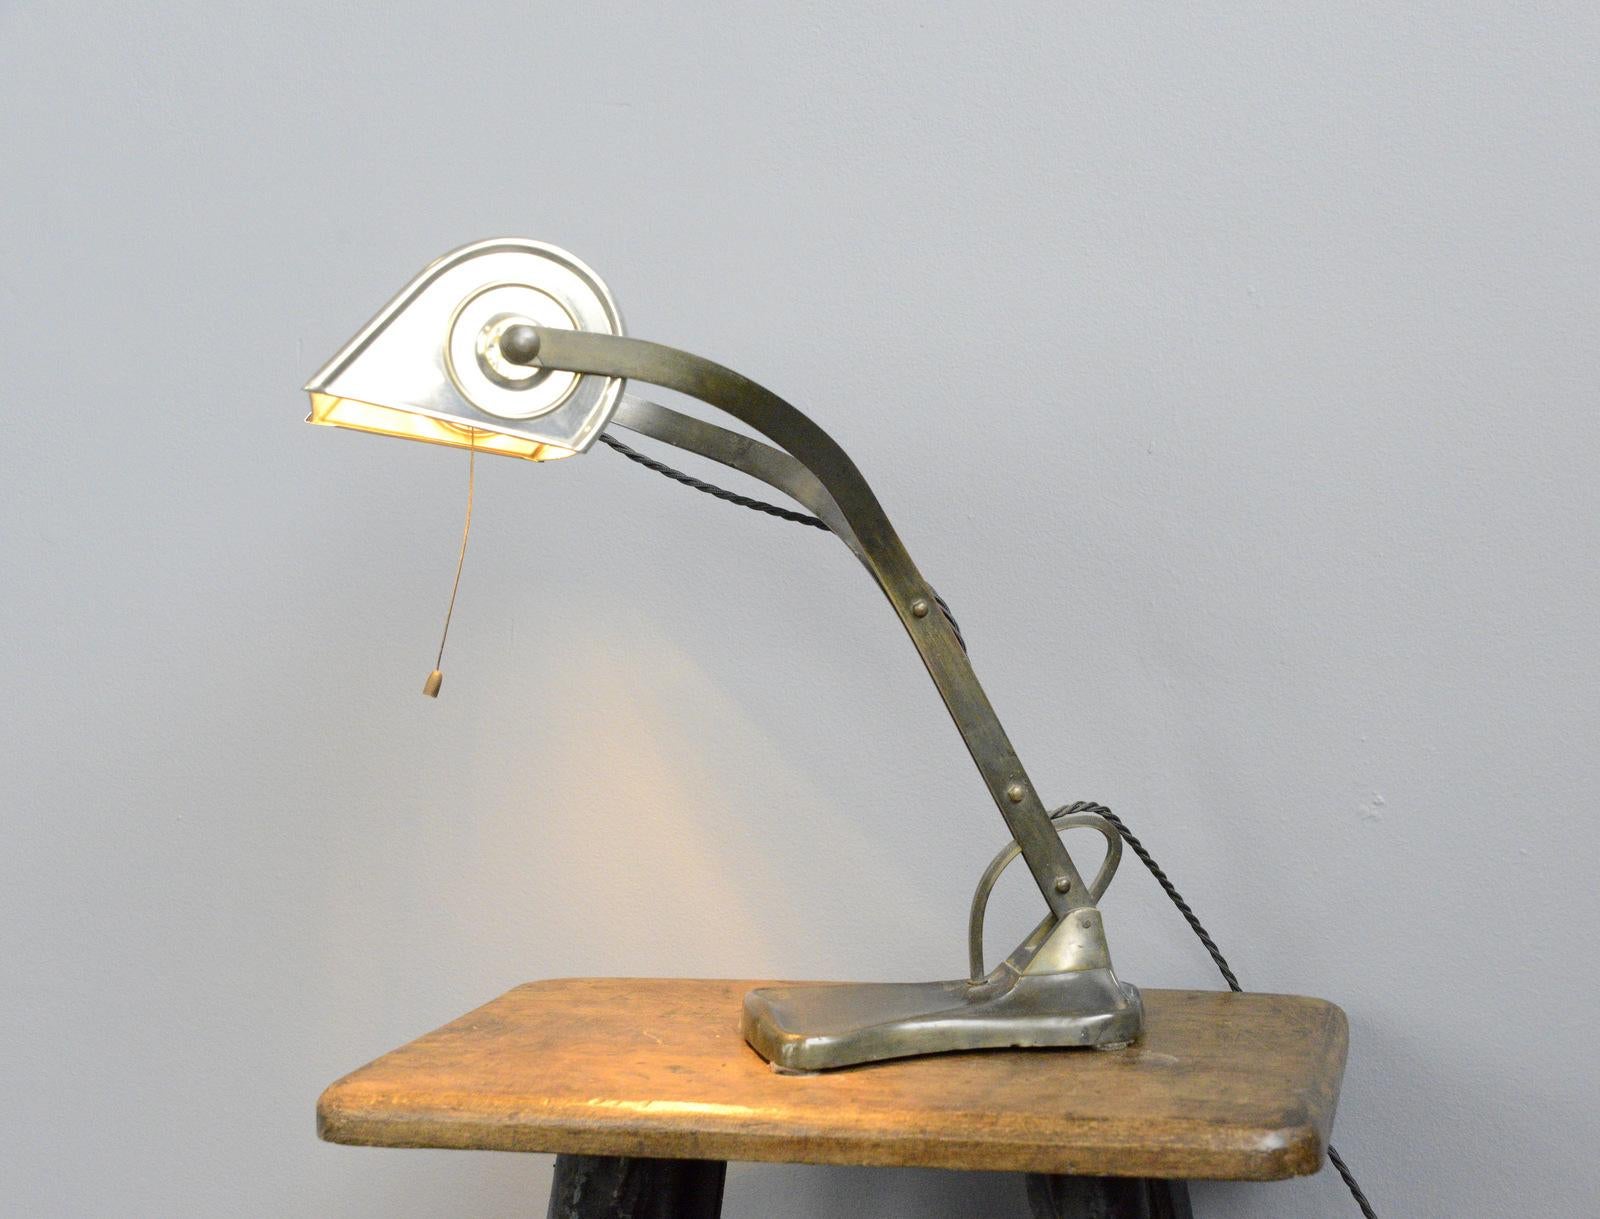 Bauhaus Desk Lamp by Robert Pfaffle for Erpees, circa 1920